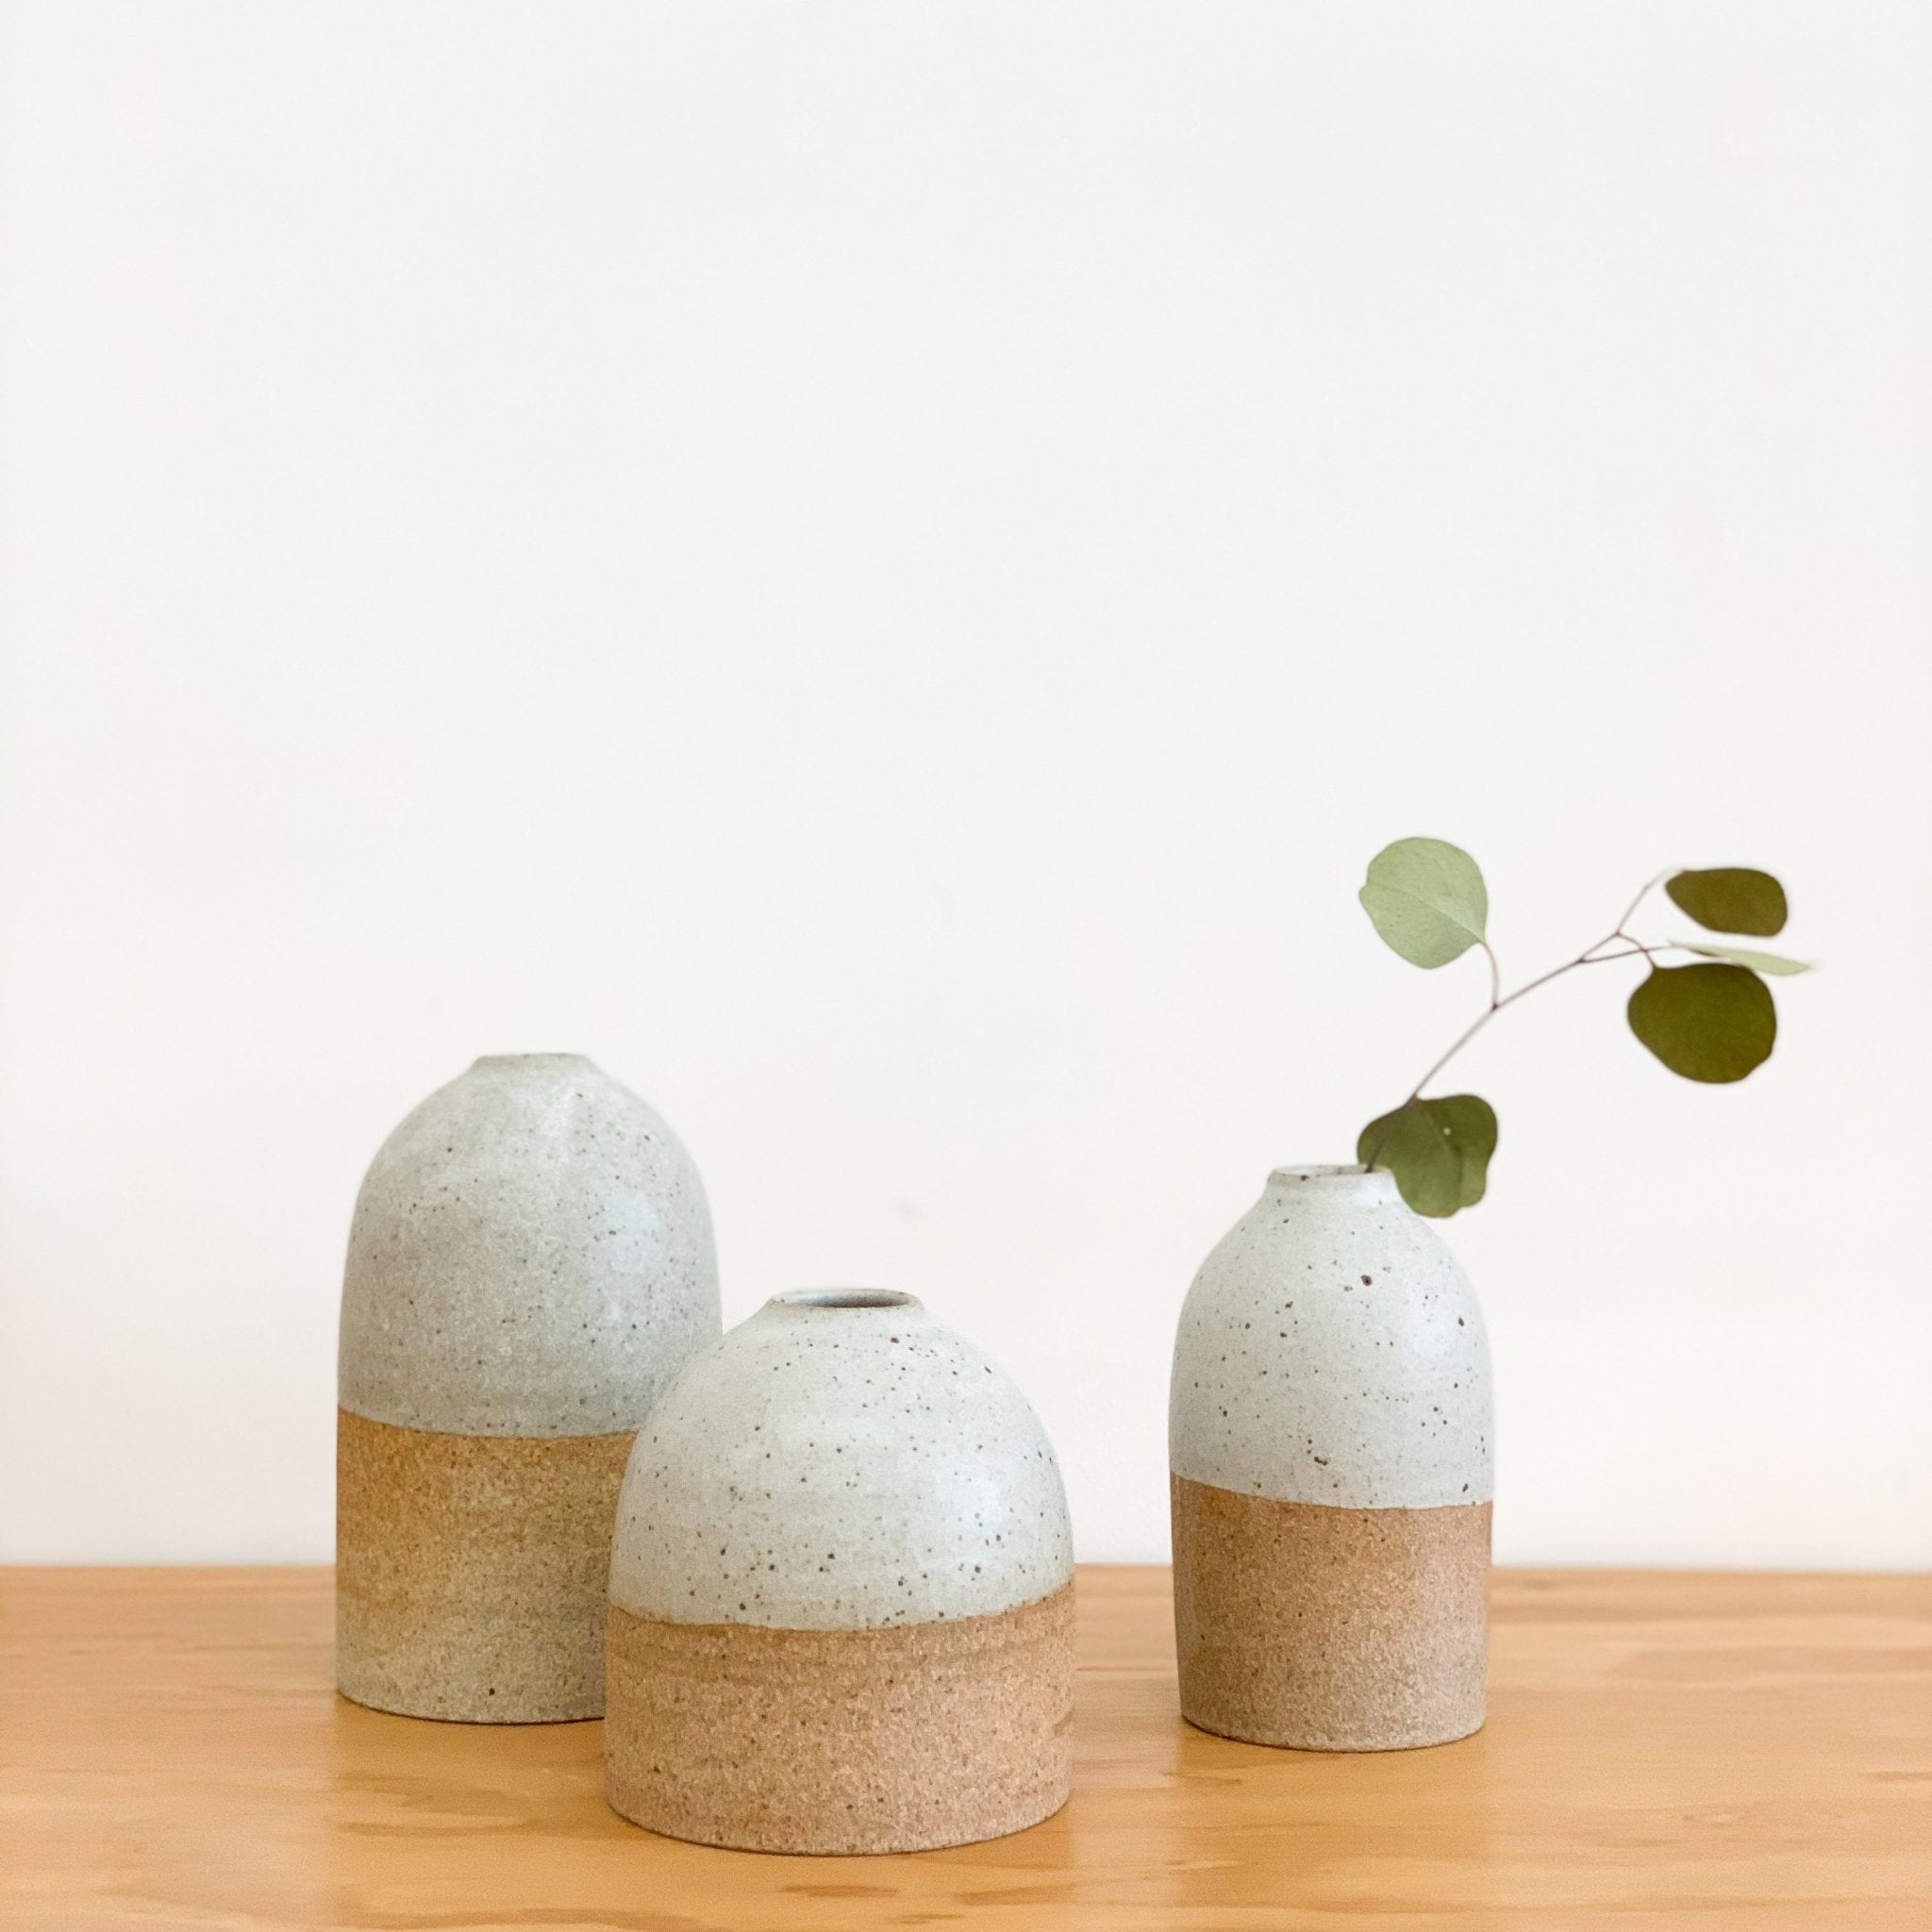 Organic round bud vases made in LA by Tomoko Morisaki